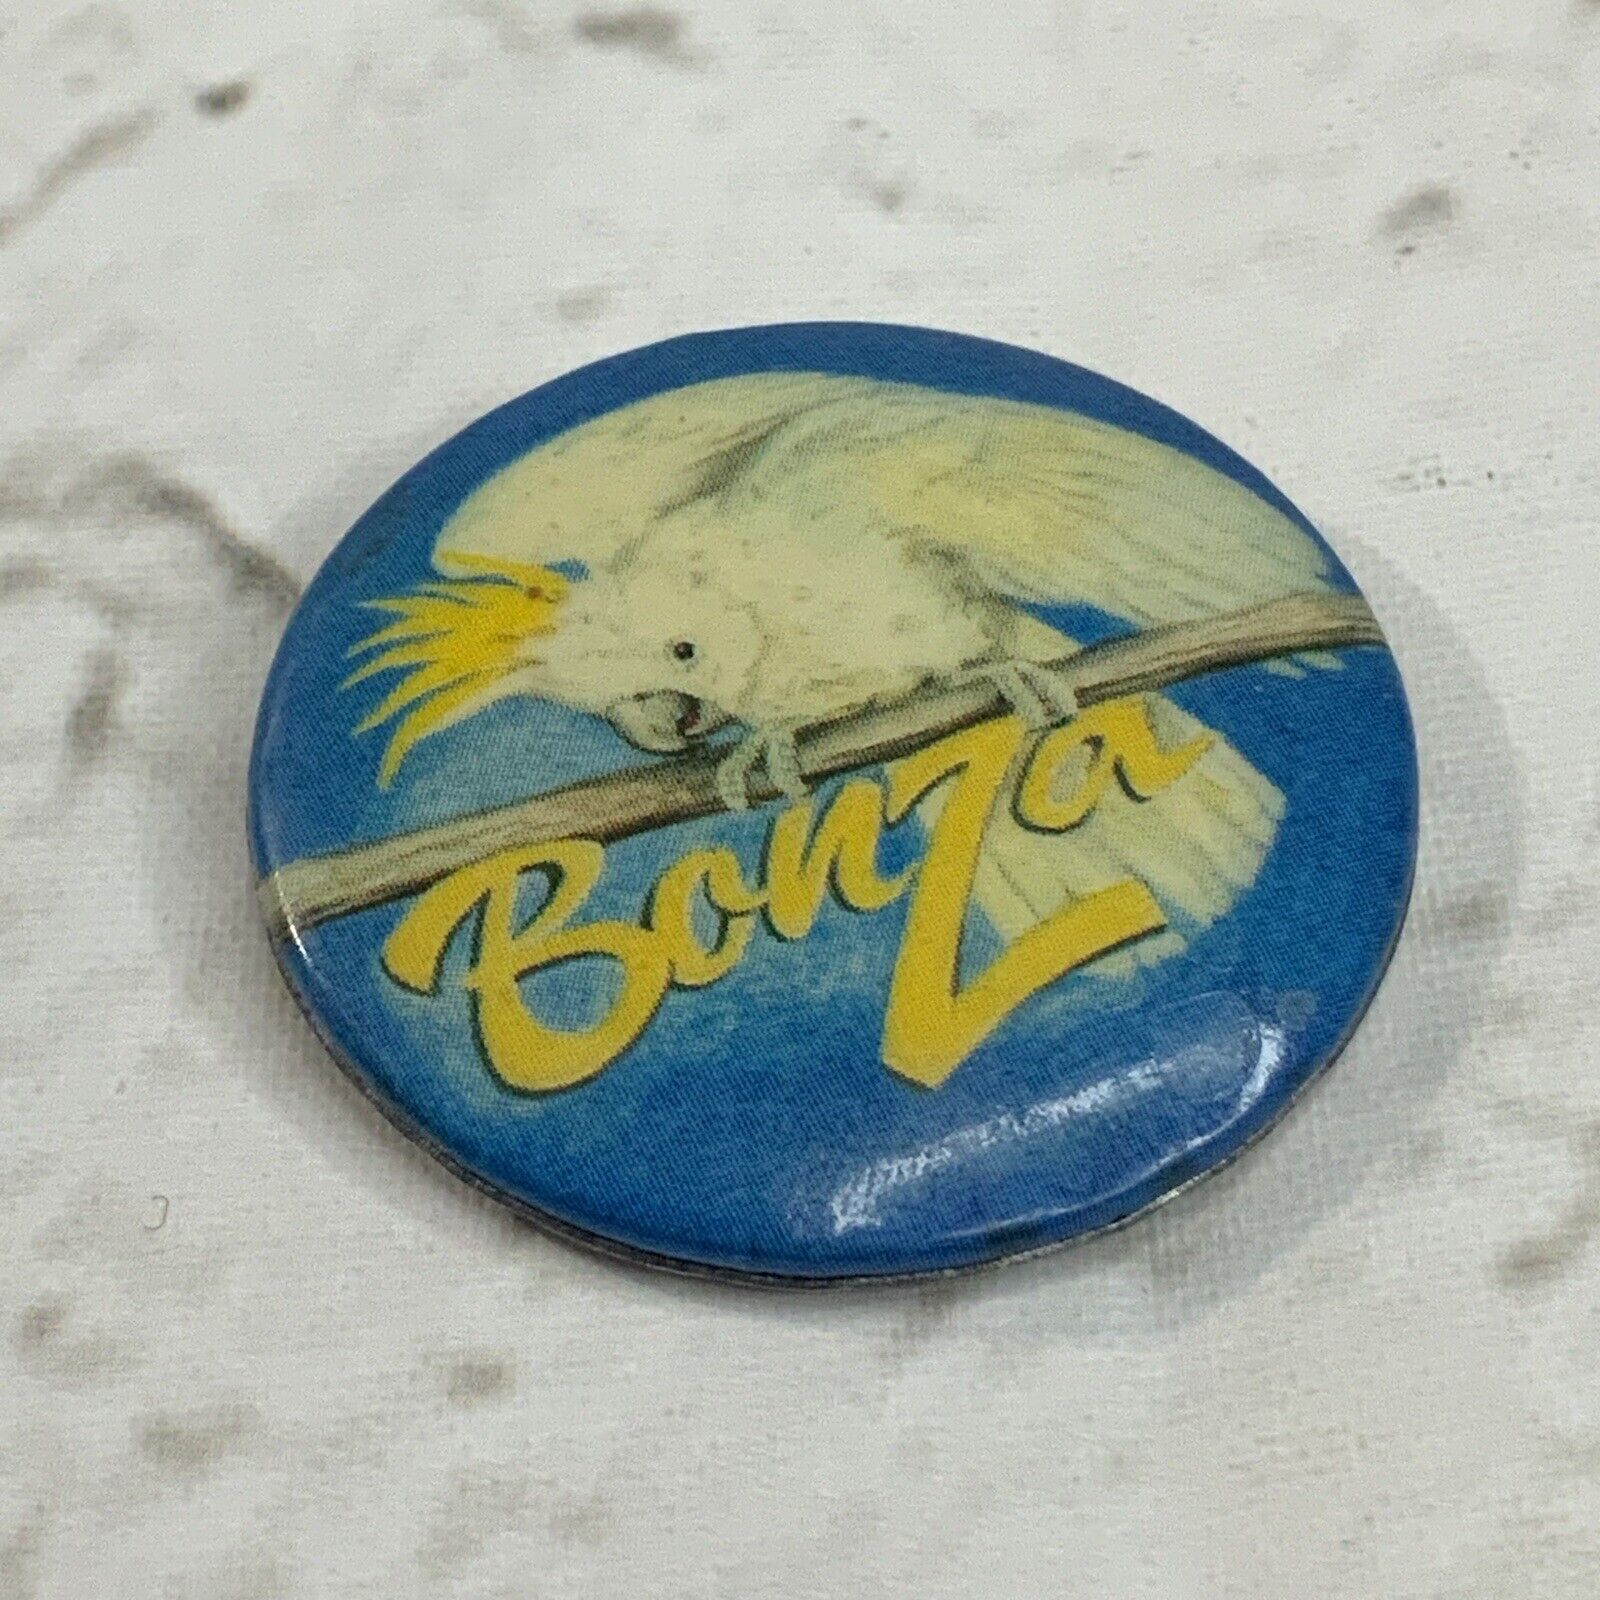 Bonza Button Pin White Parrot Bird Blue Round 1.5” Vintage